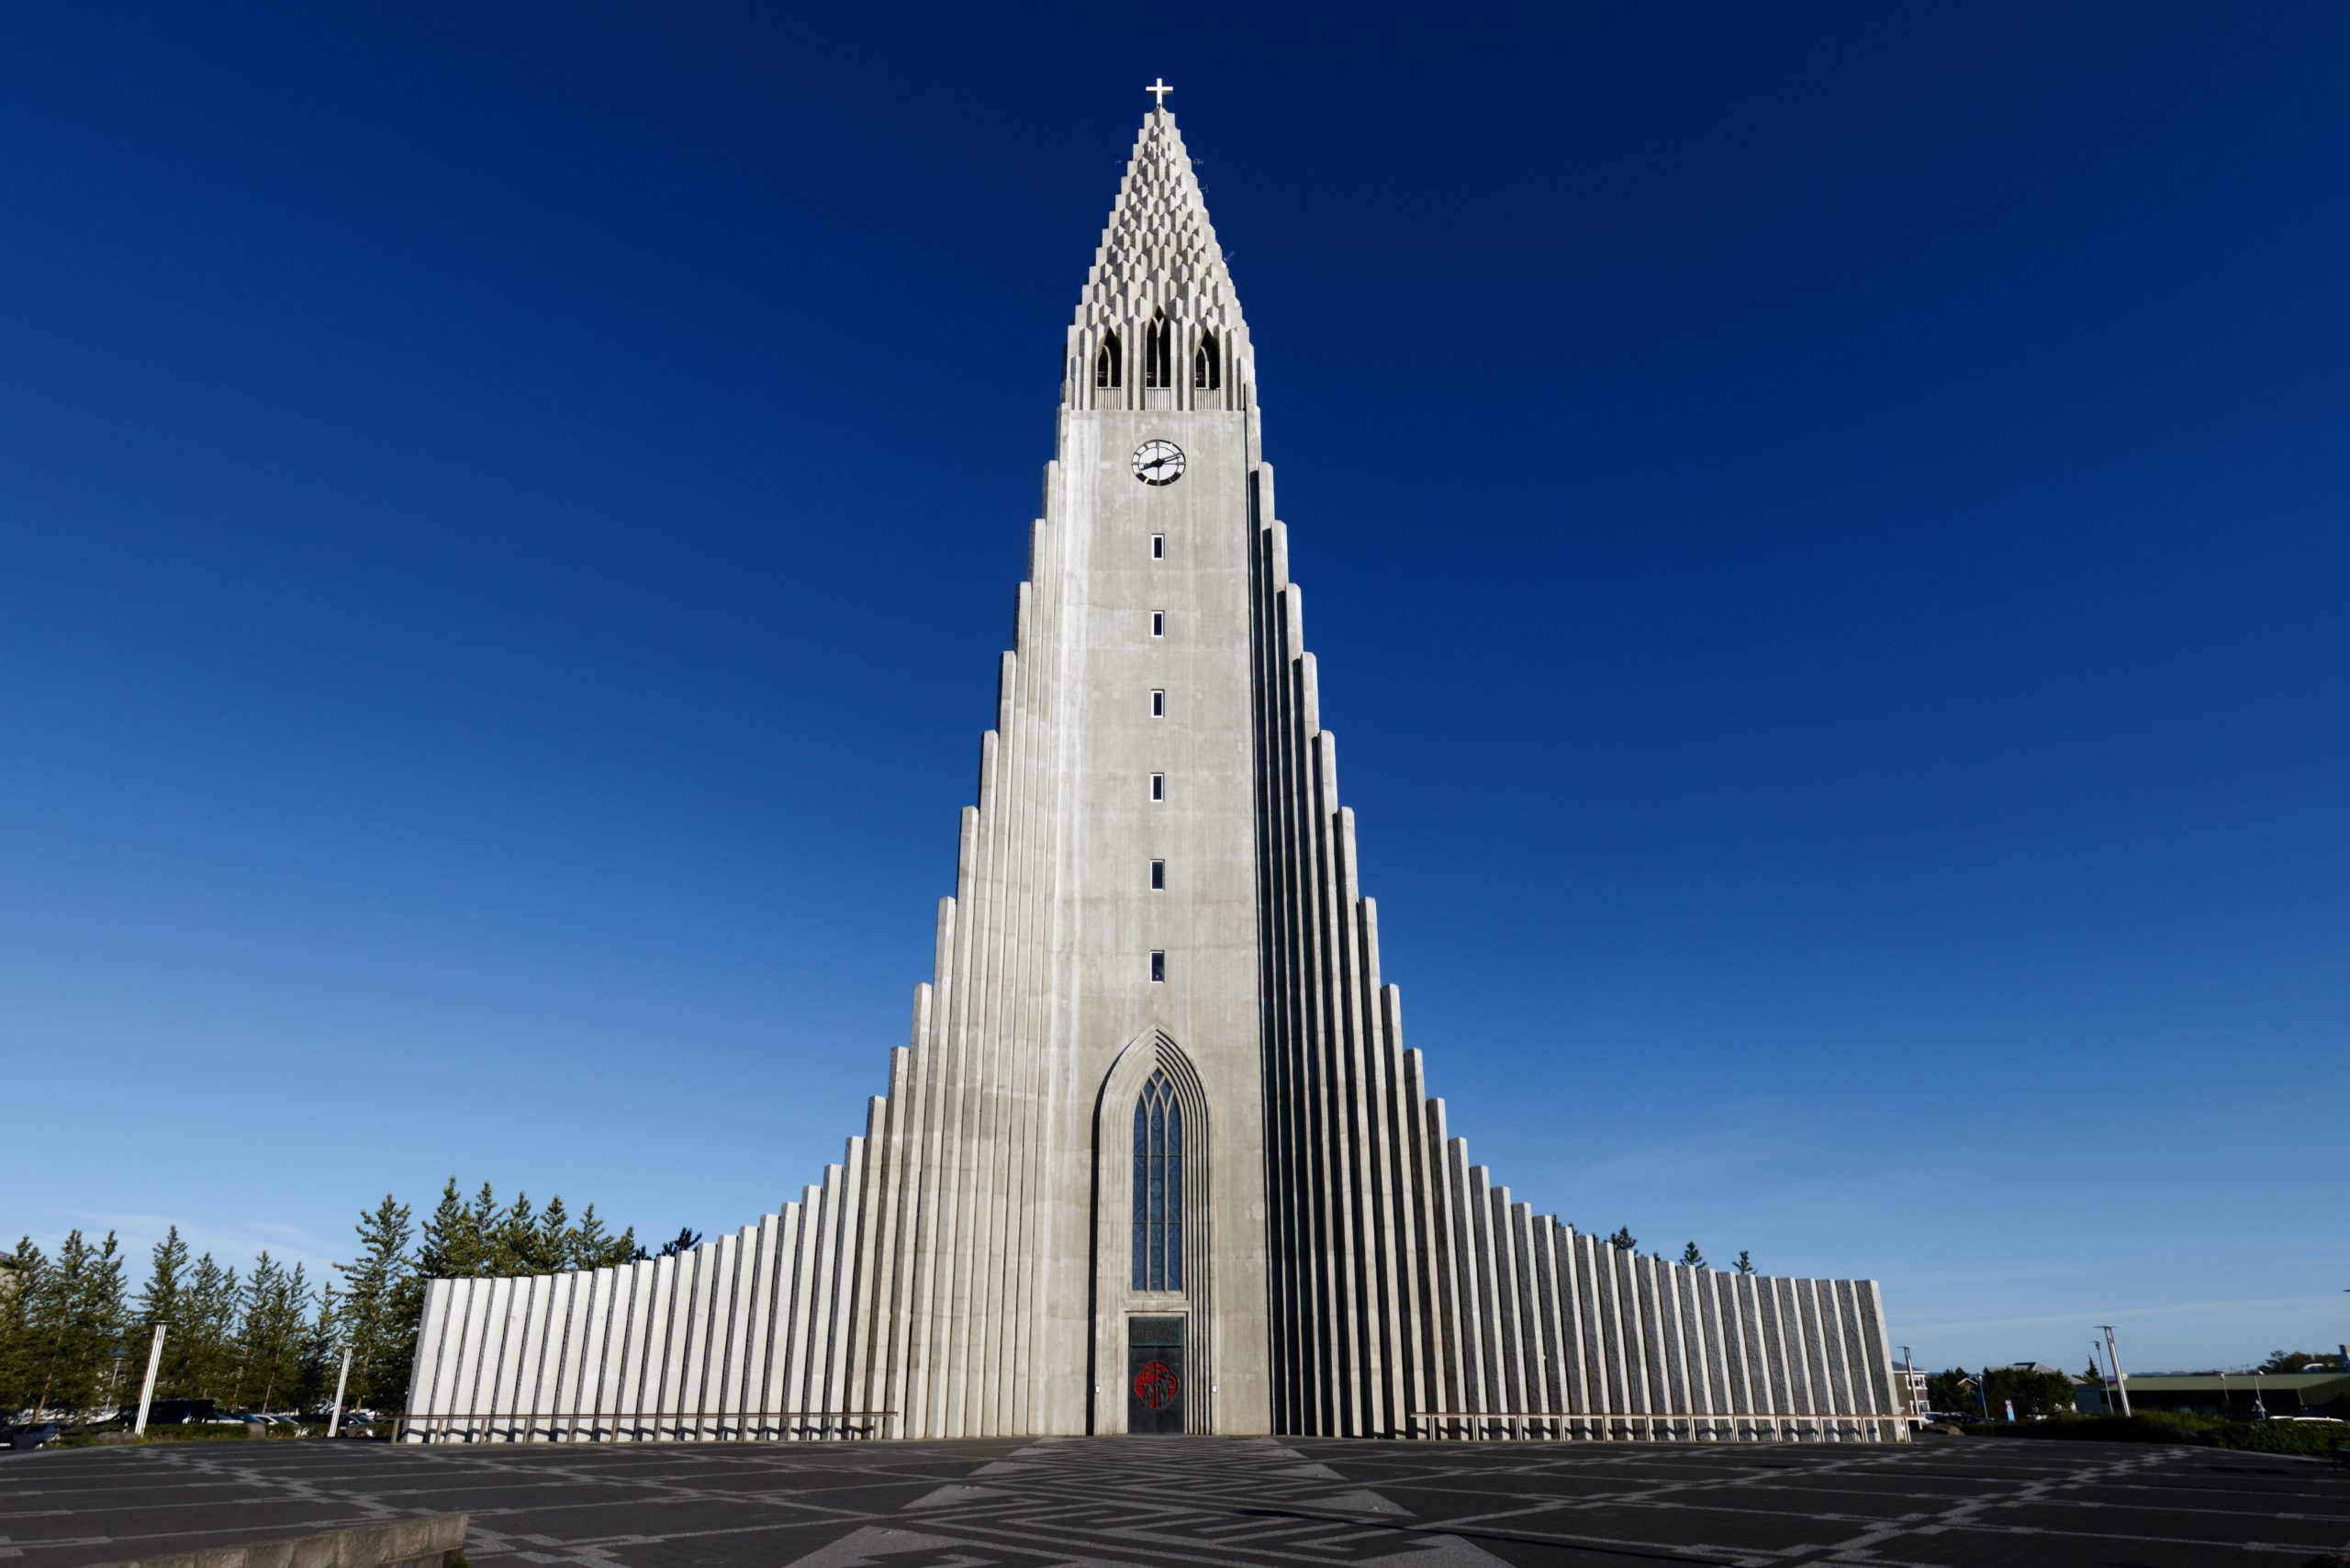 Reykjavík's most famous landmark, Hallgrímskirkja church.